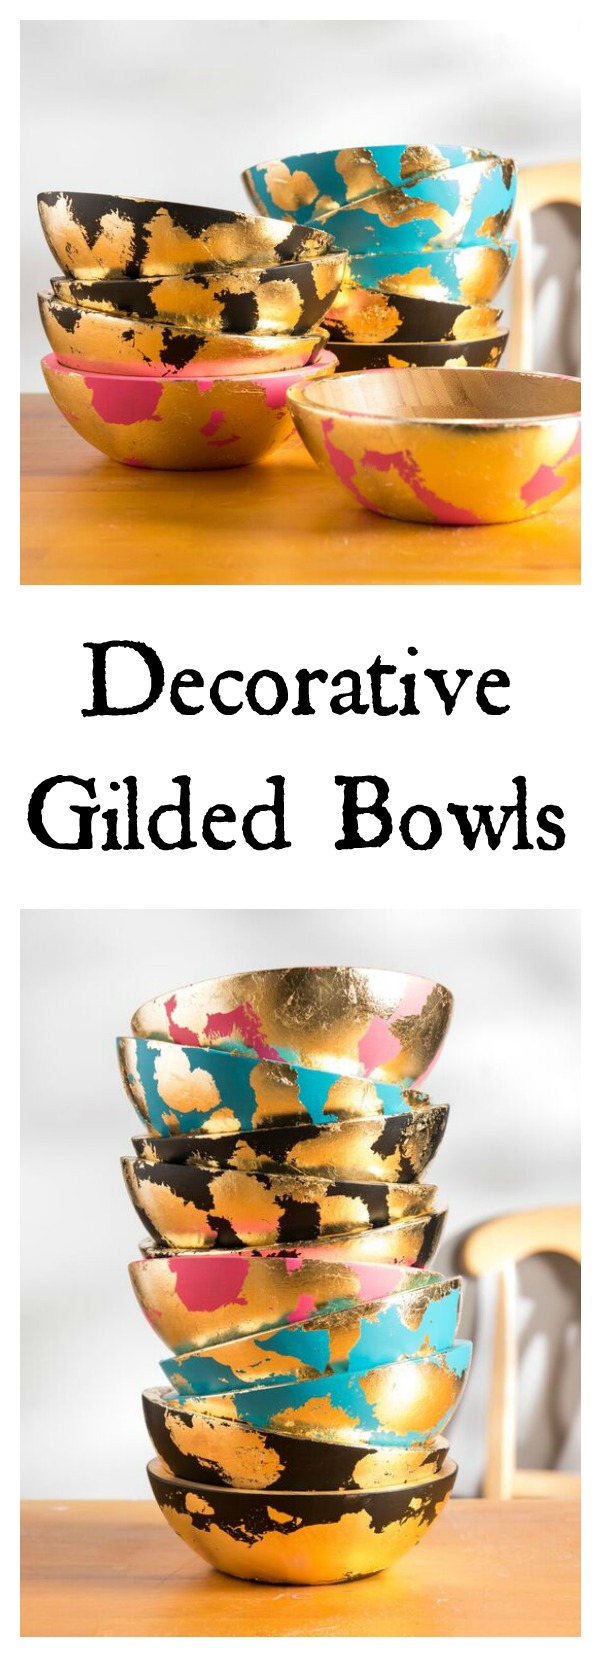 Decorative Gilded Bowls